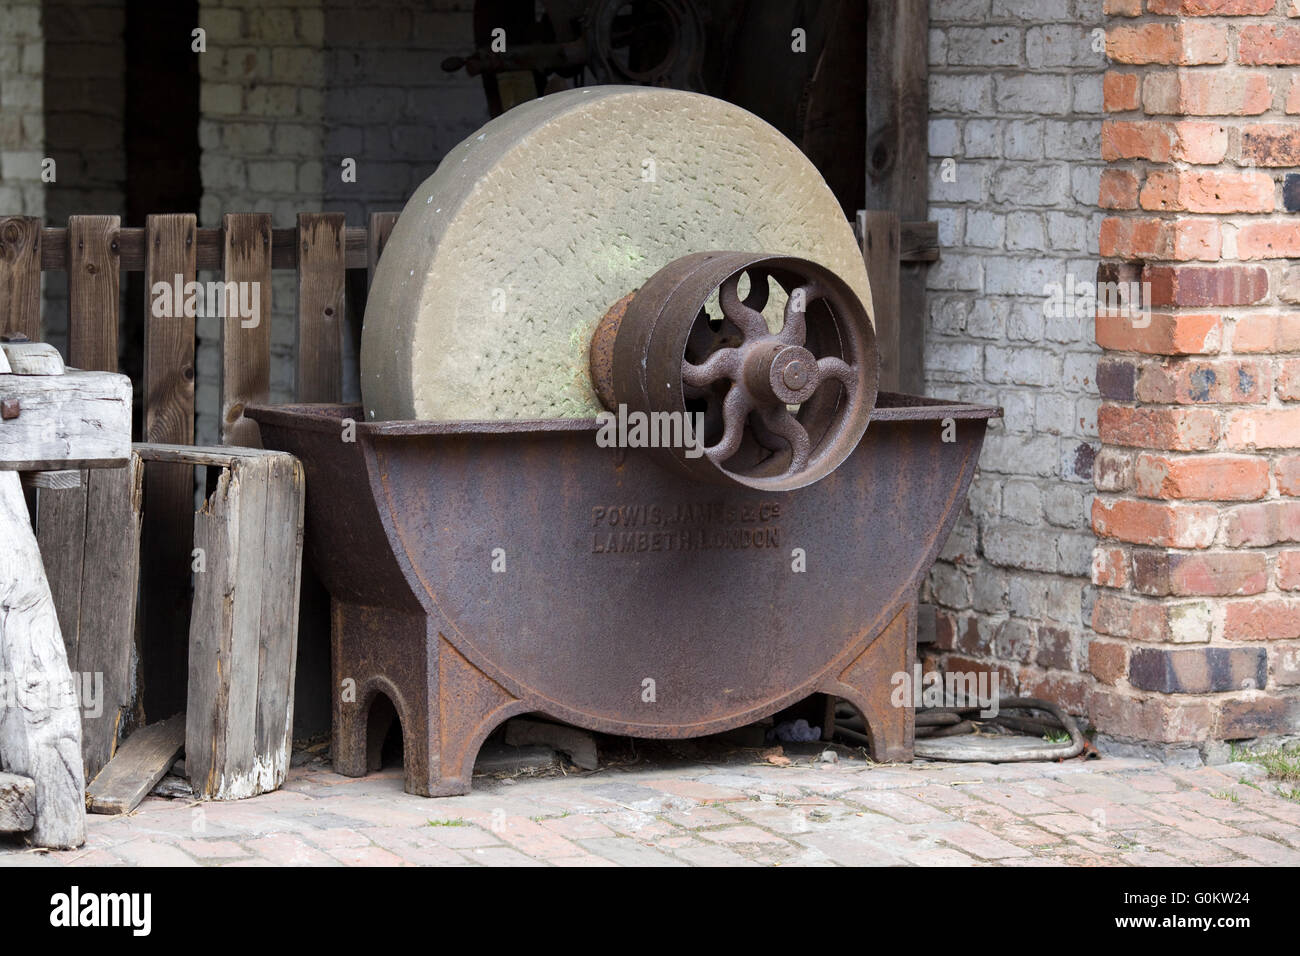 https://c8.alamy.com/comp/G0KW24/old-vintage-steel-sharpening-mill-stone-G0KW24.jpg